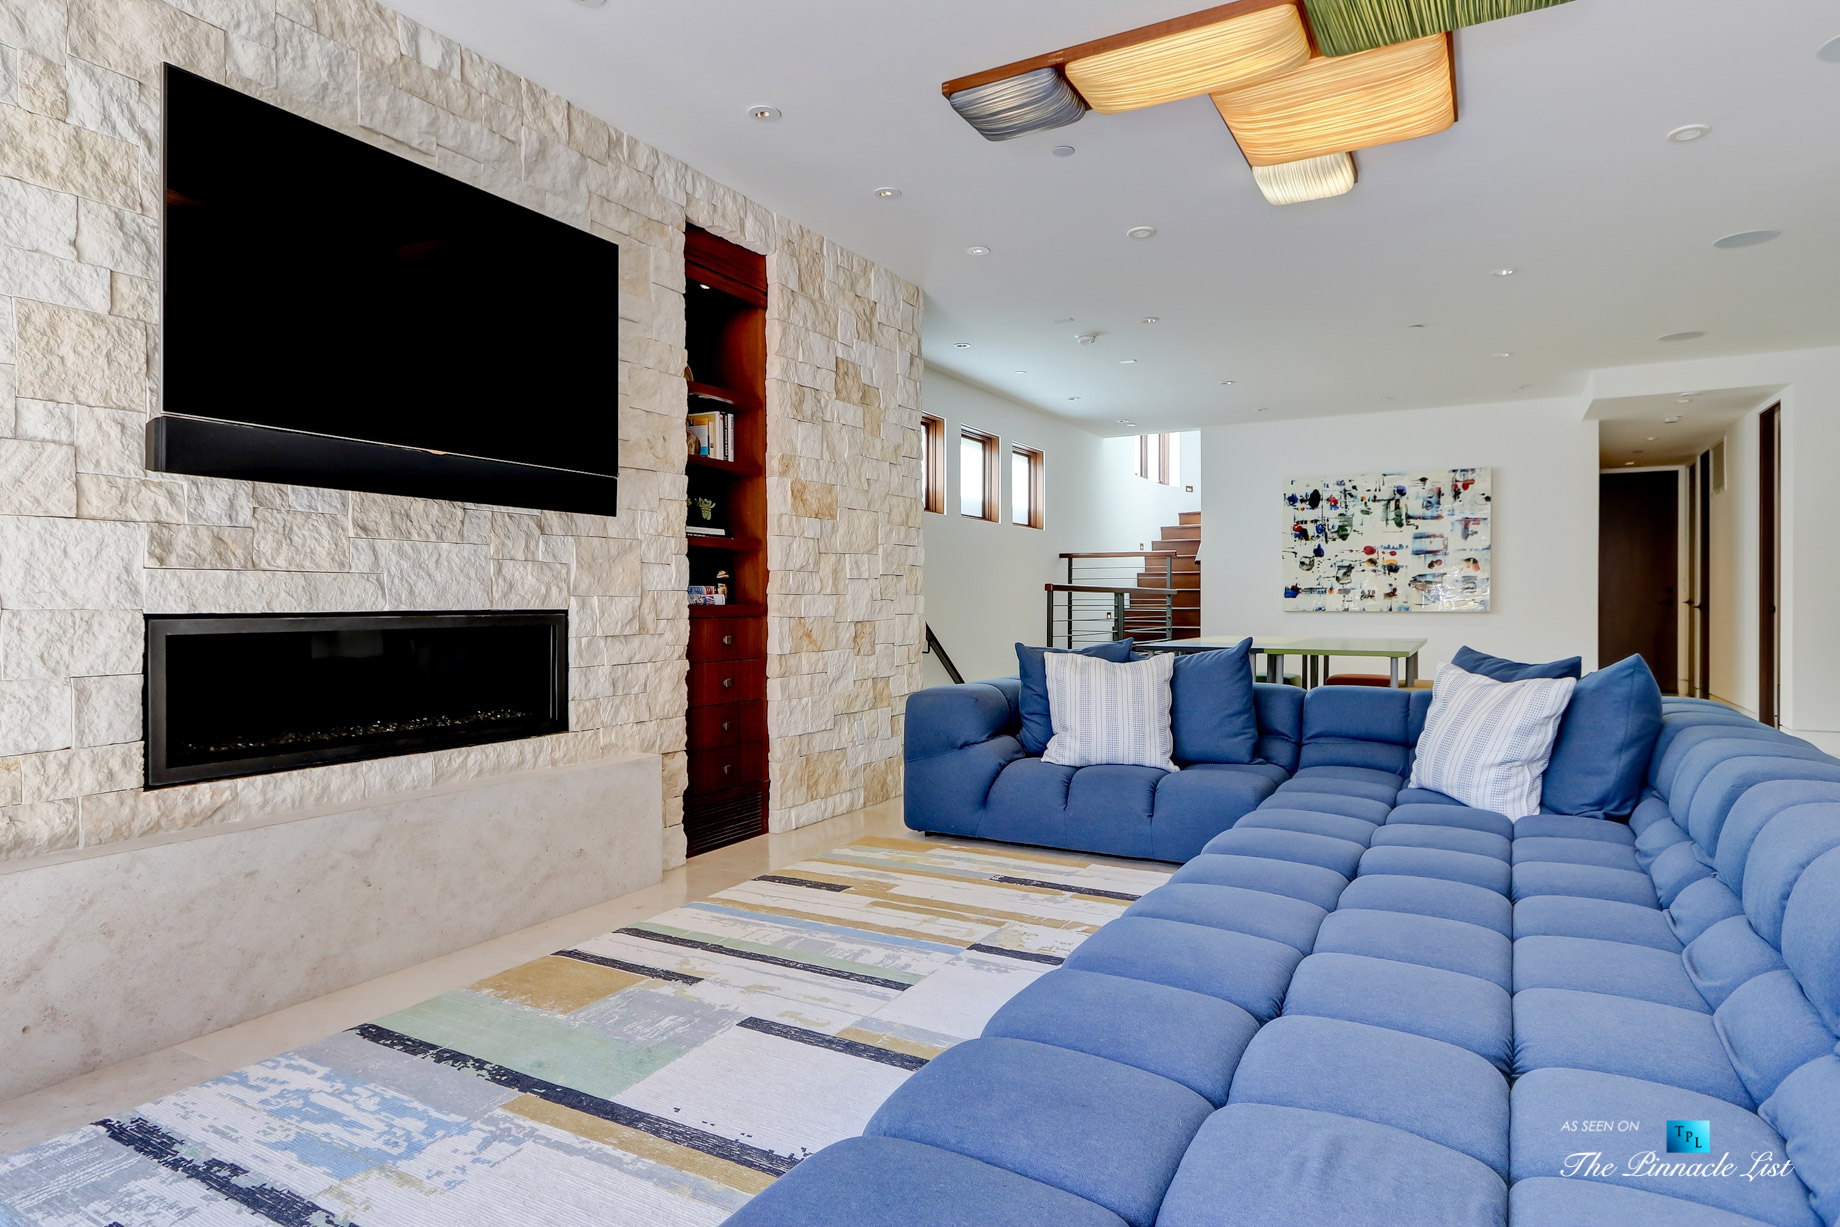 205 20th Street, Manhattan Beach, CA, USA - Beach Room Fireplace - Luxury Real Estate - Ocean View Home